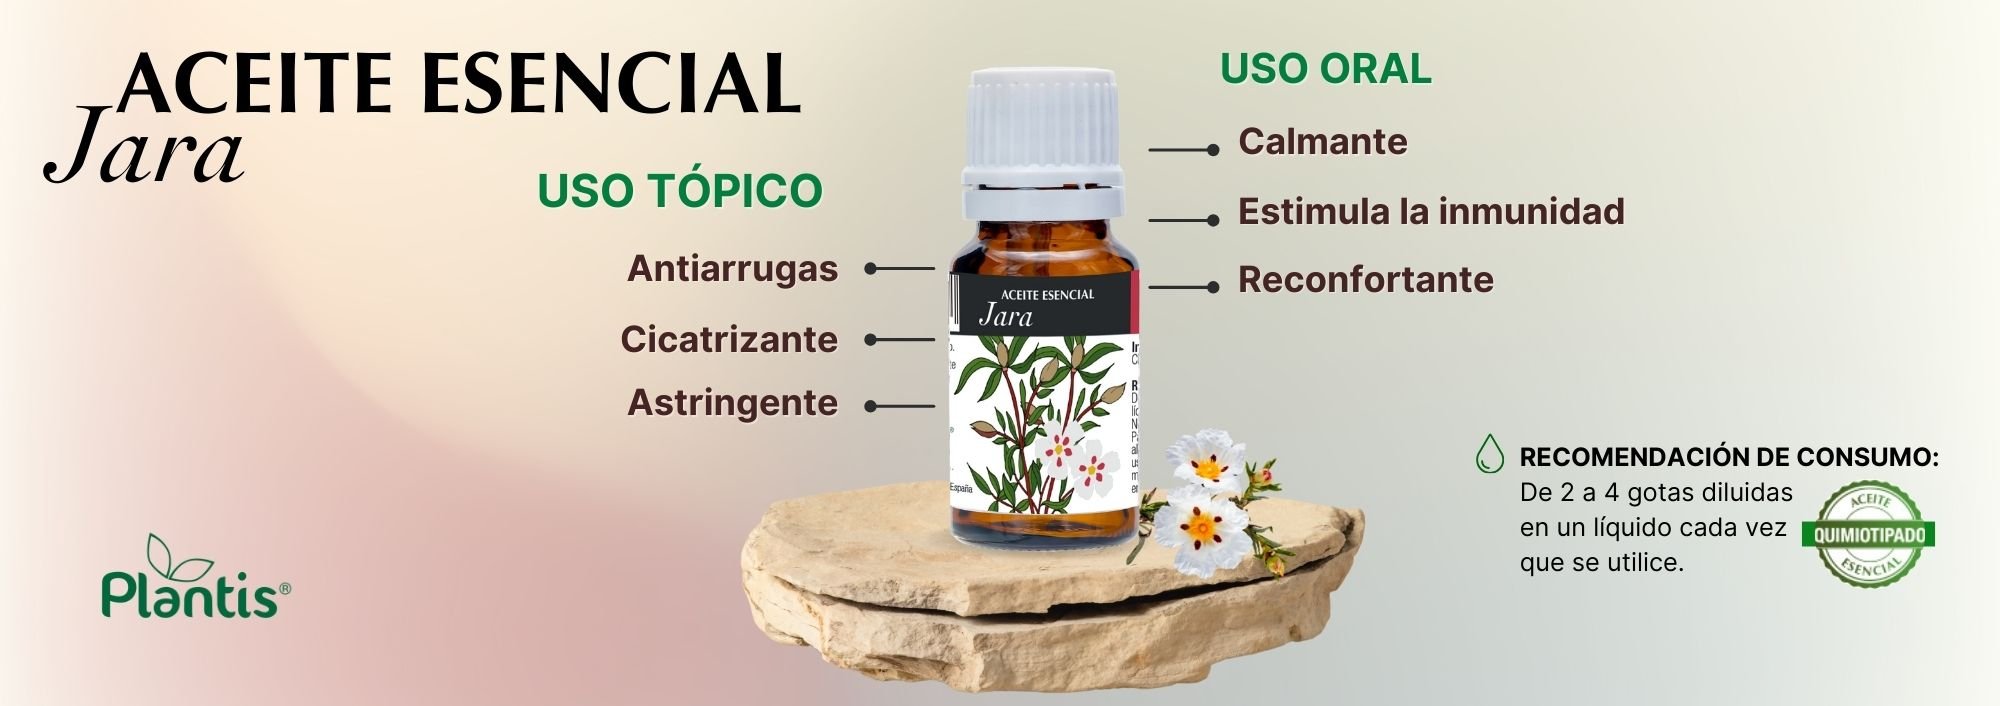 Aceite esencial Jara Plantis (17 x 6 cm).jpg